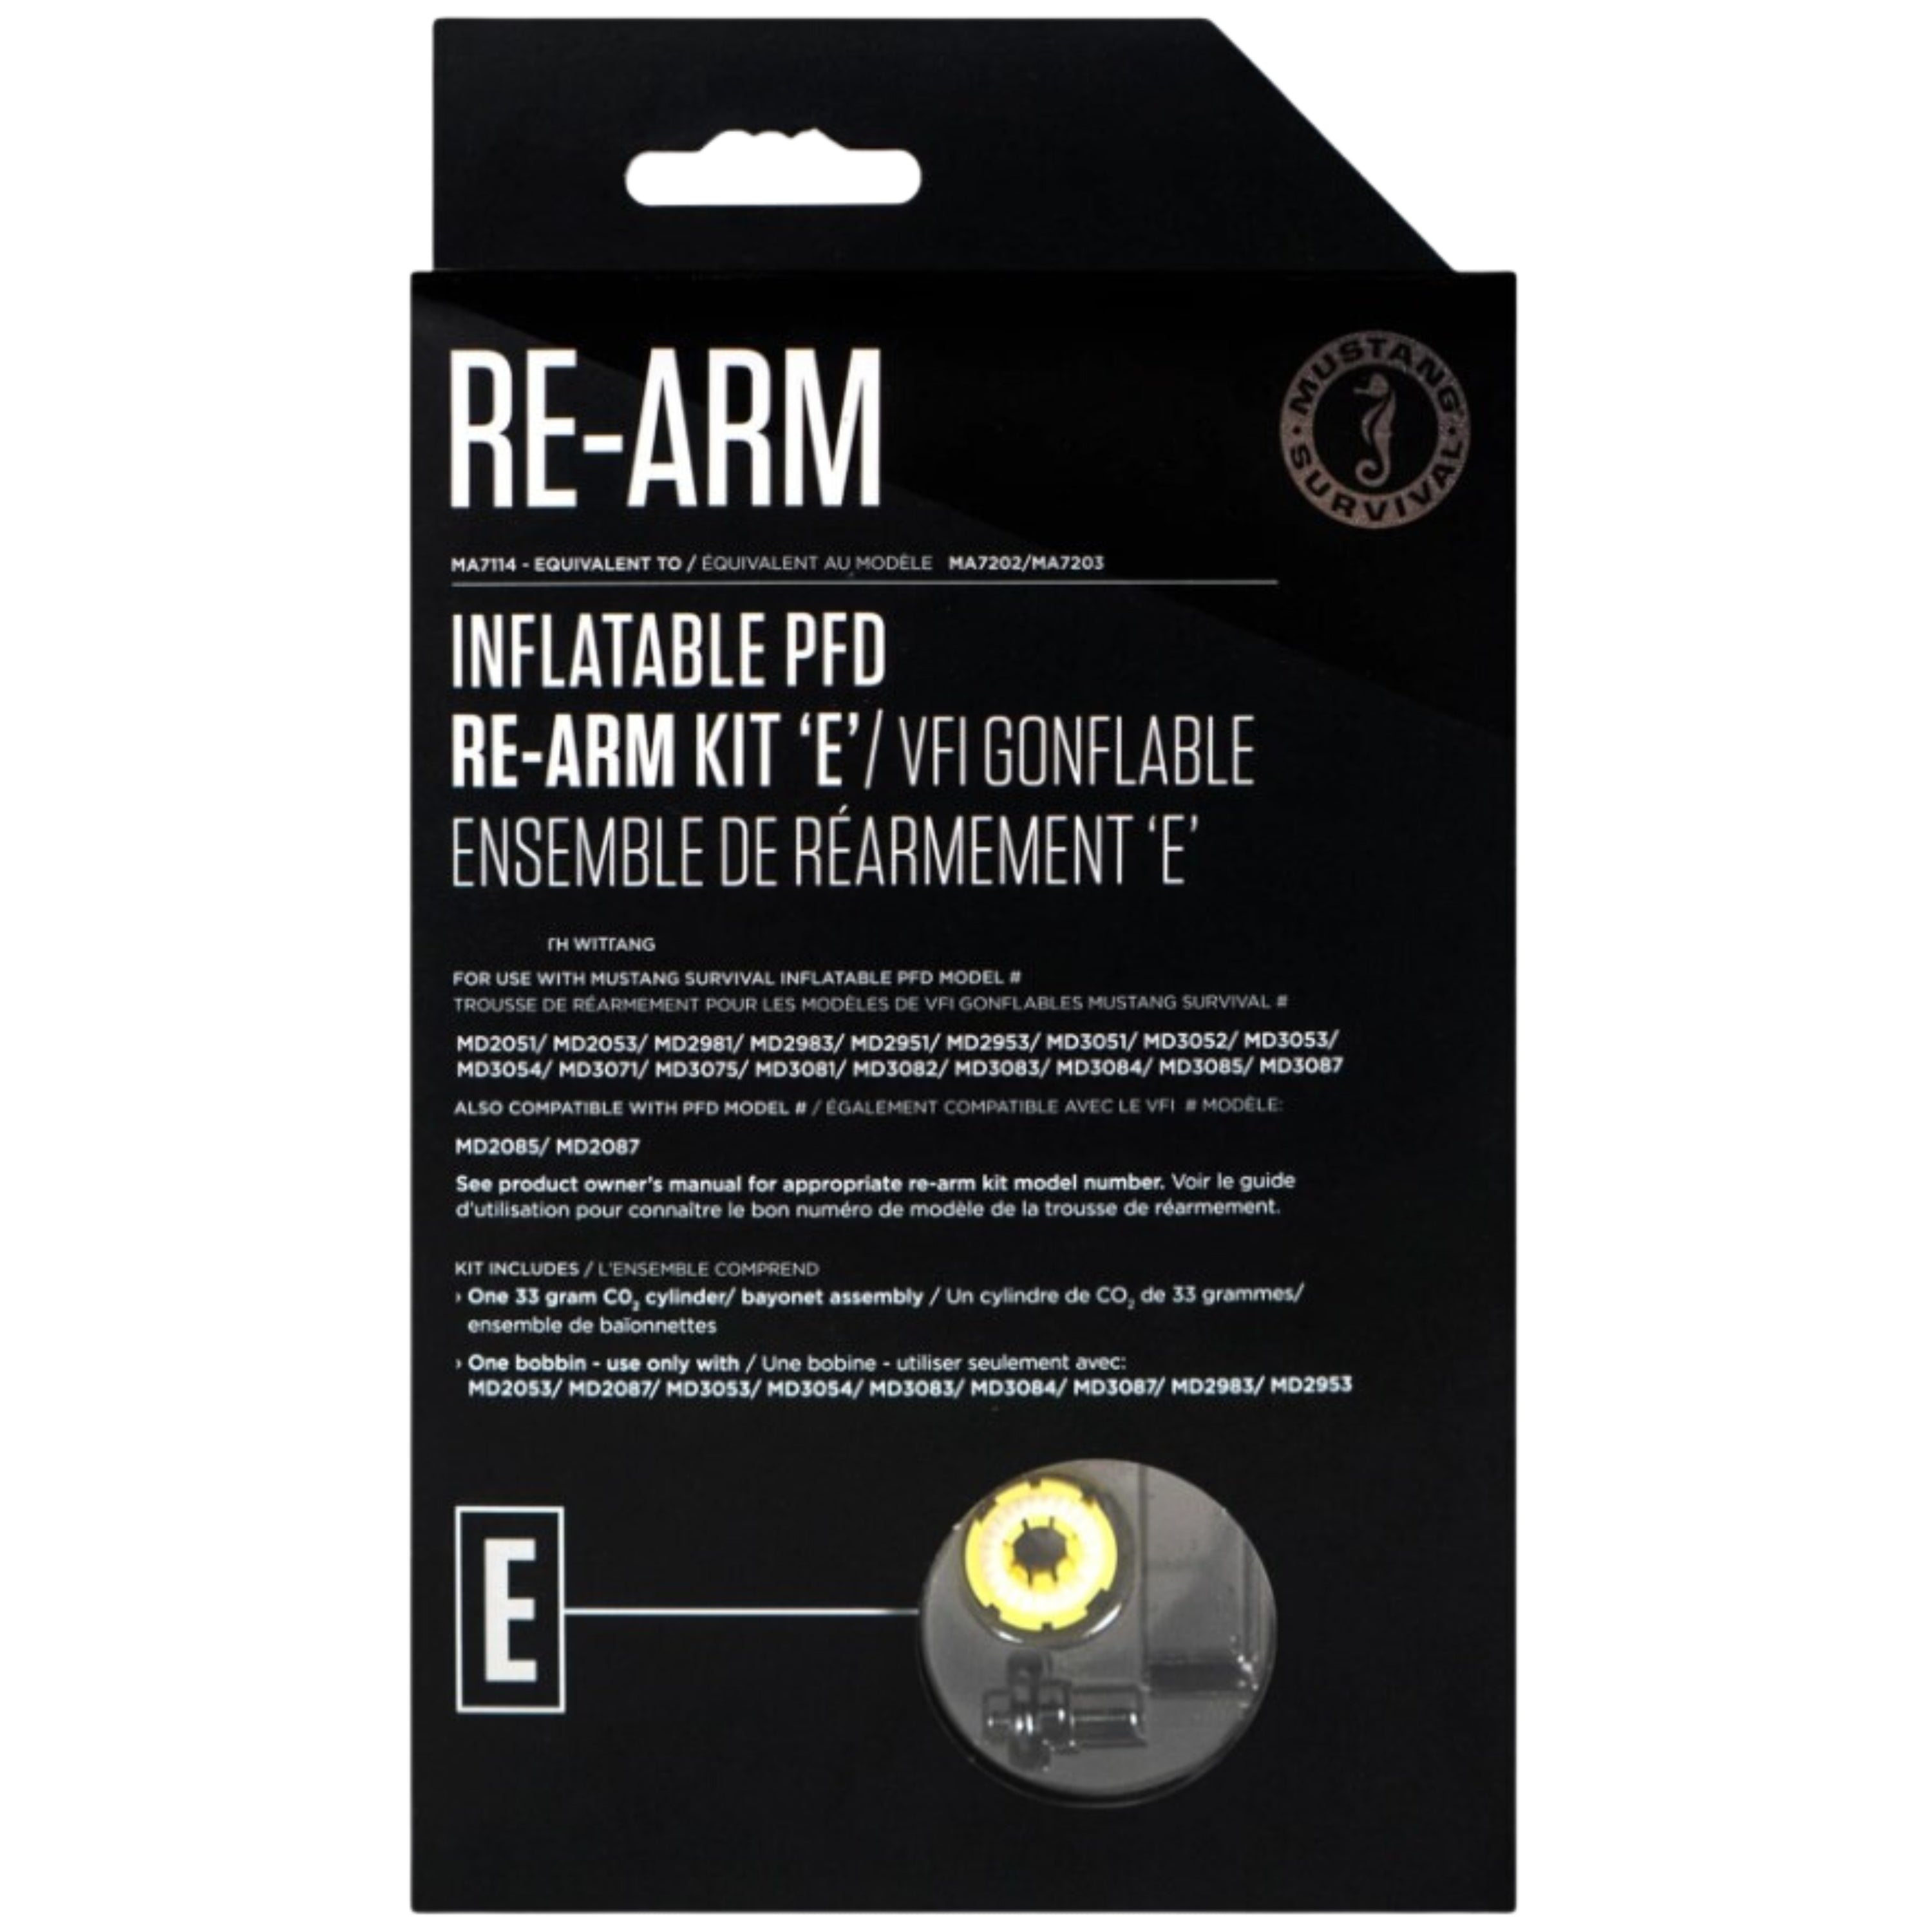 Re-arm kit E auto/manual - 33 g